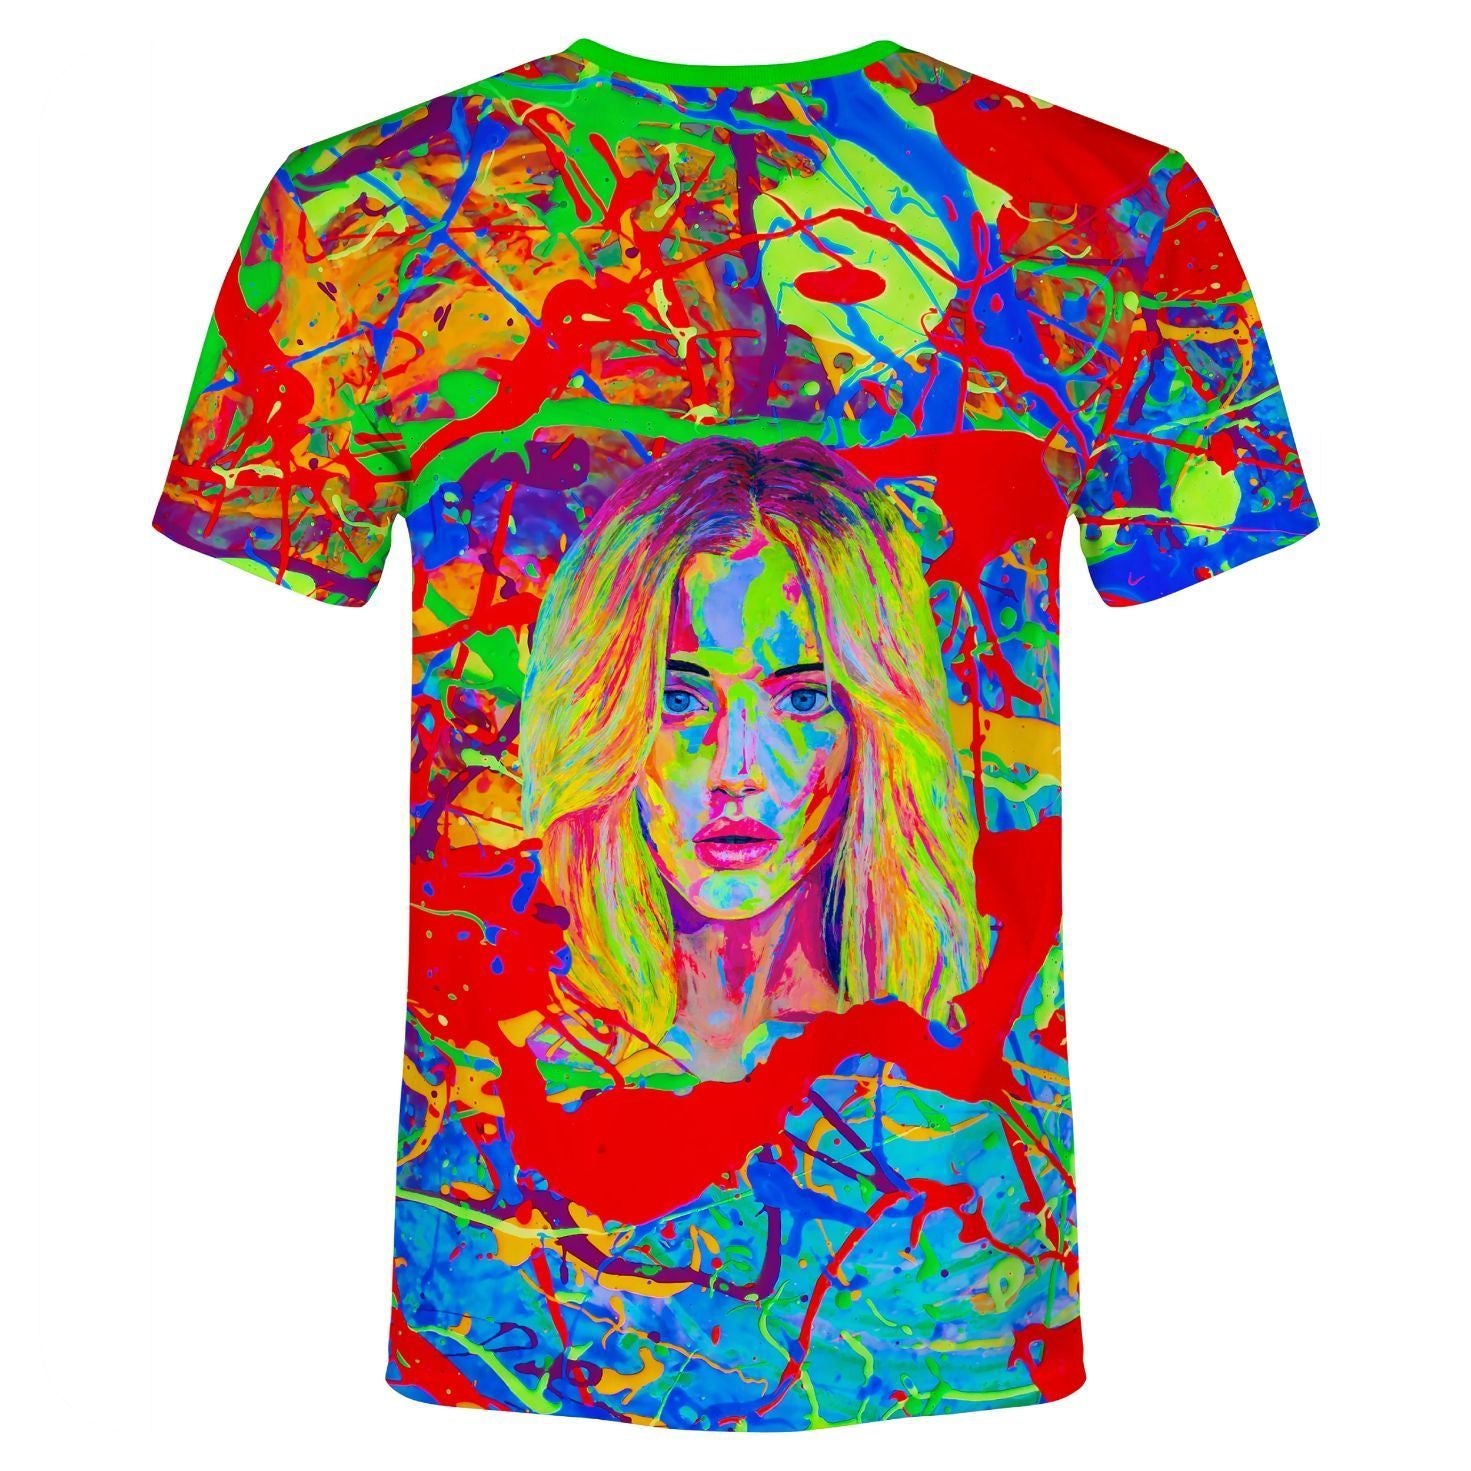 Neon T-Shirt for Women Glow in UV Fluorescent Faces Girls Splash ts2